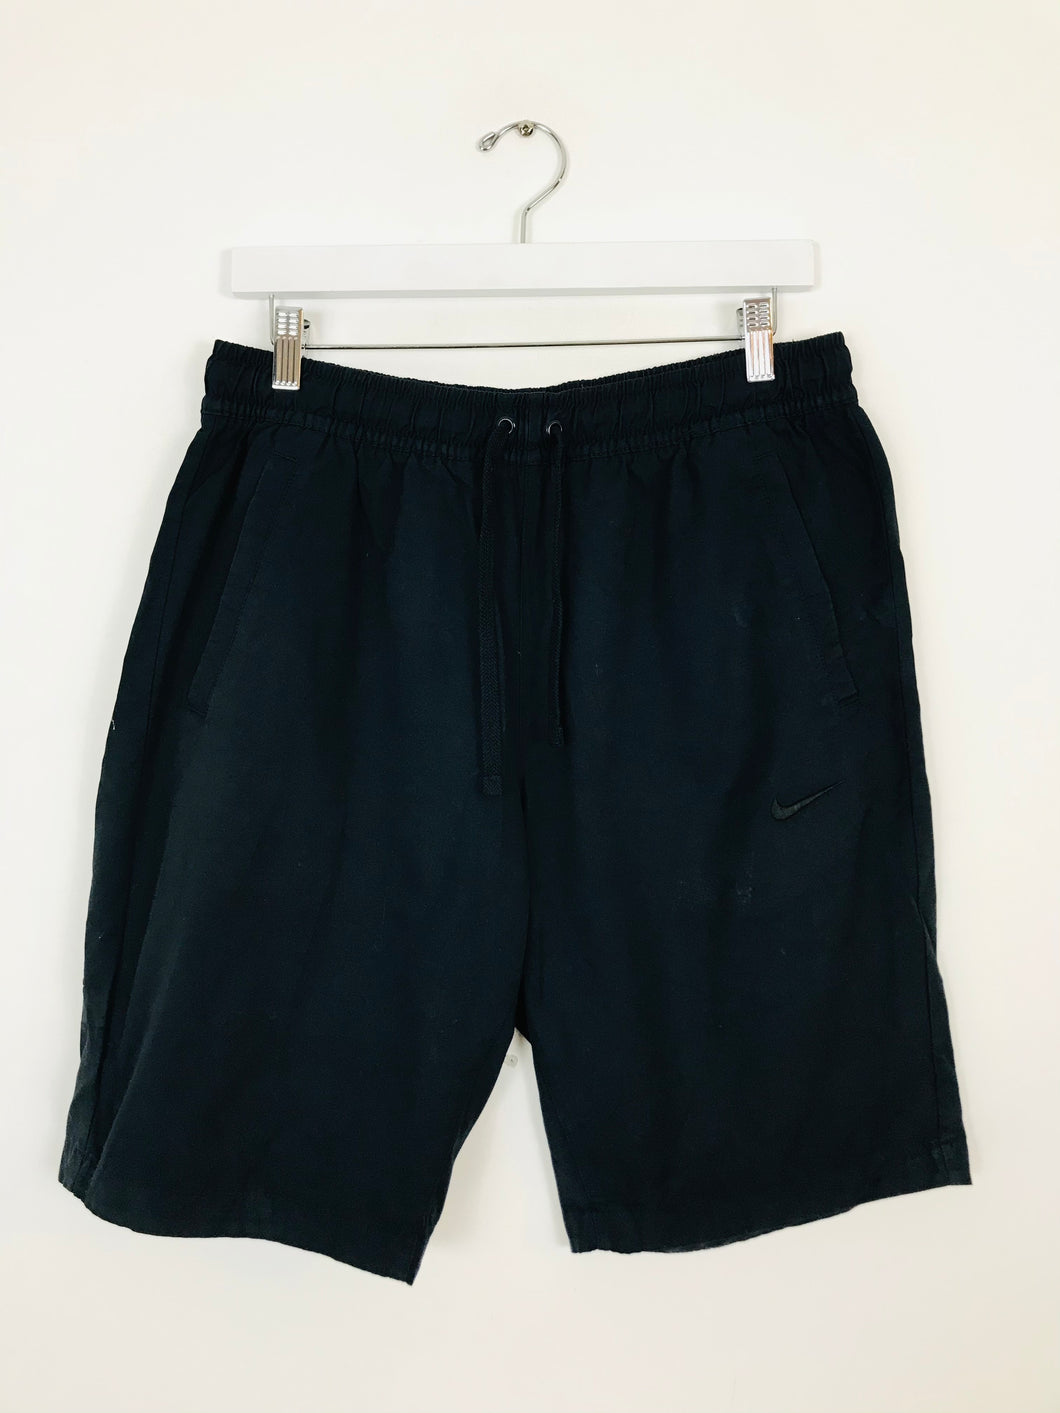 Nike Men’s Sports Running Shorts | M W31 L10 | Black